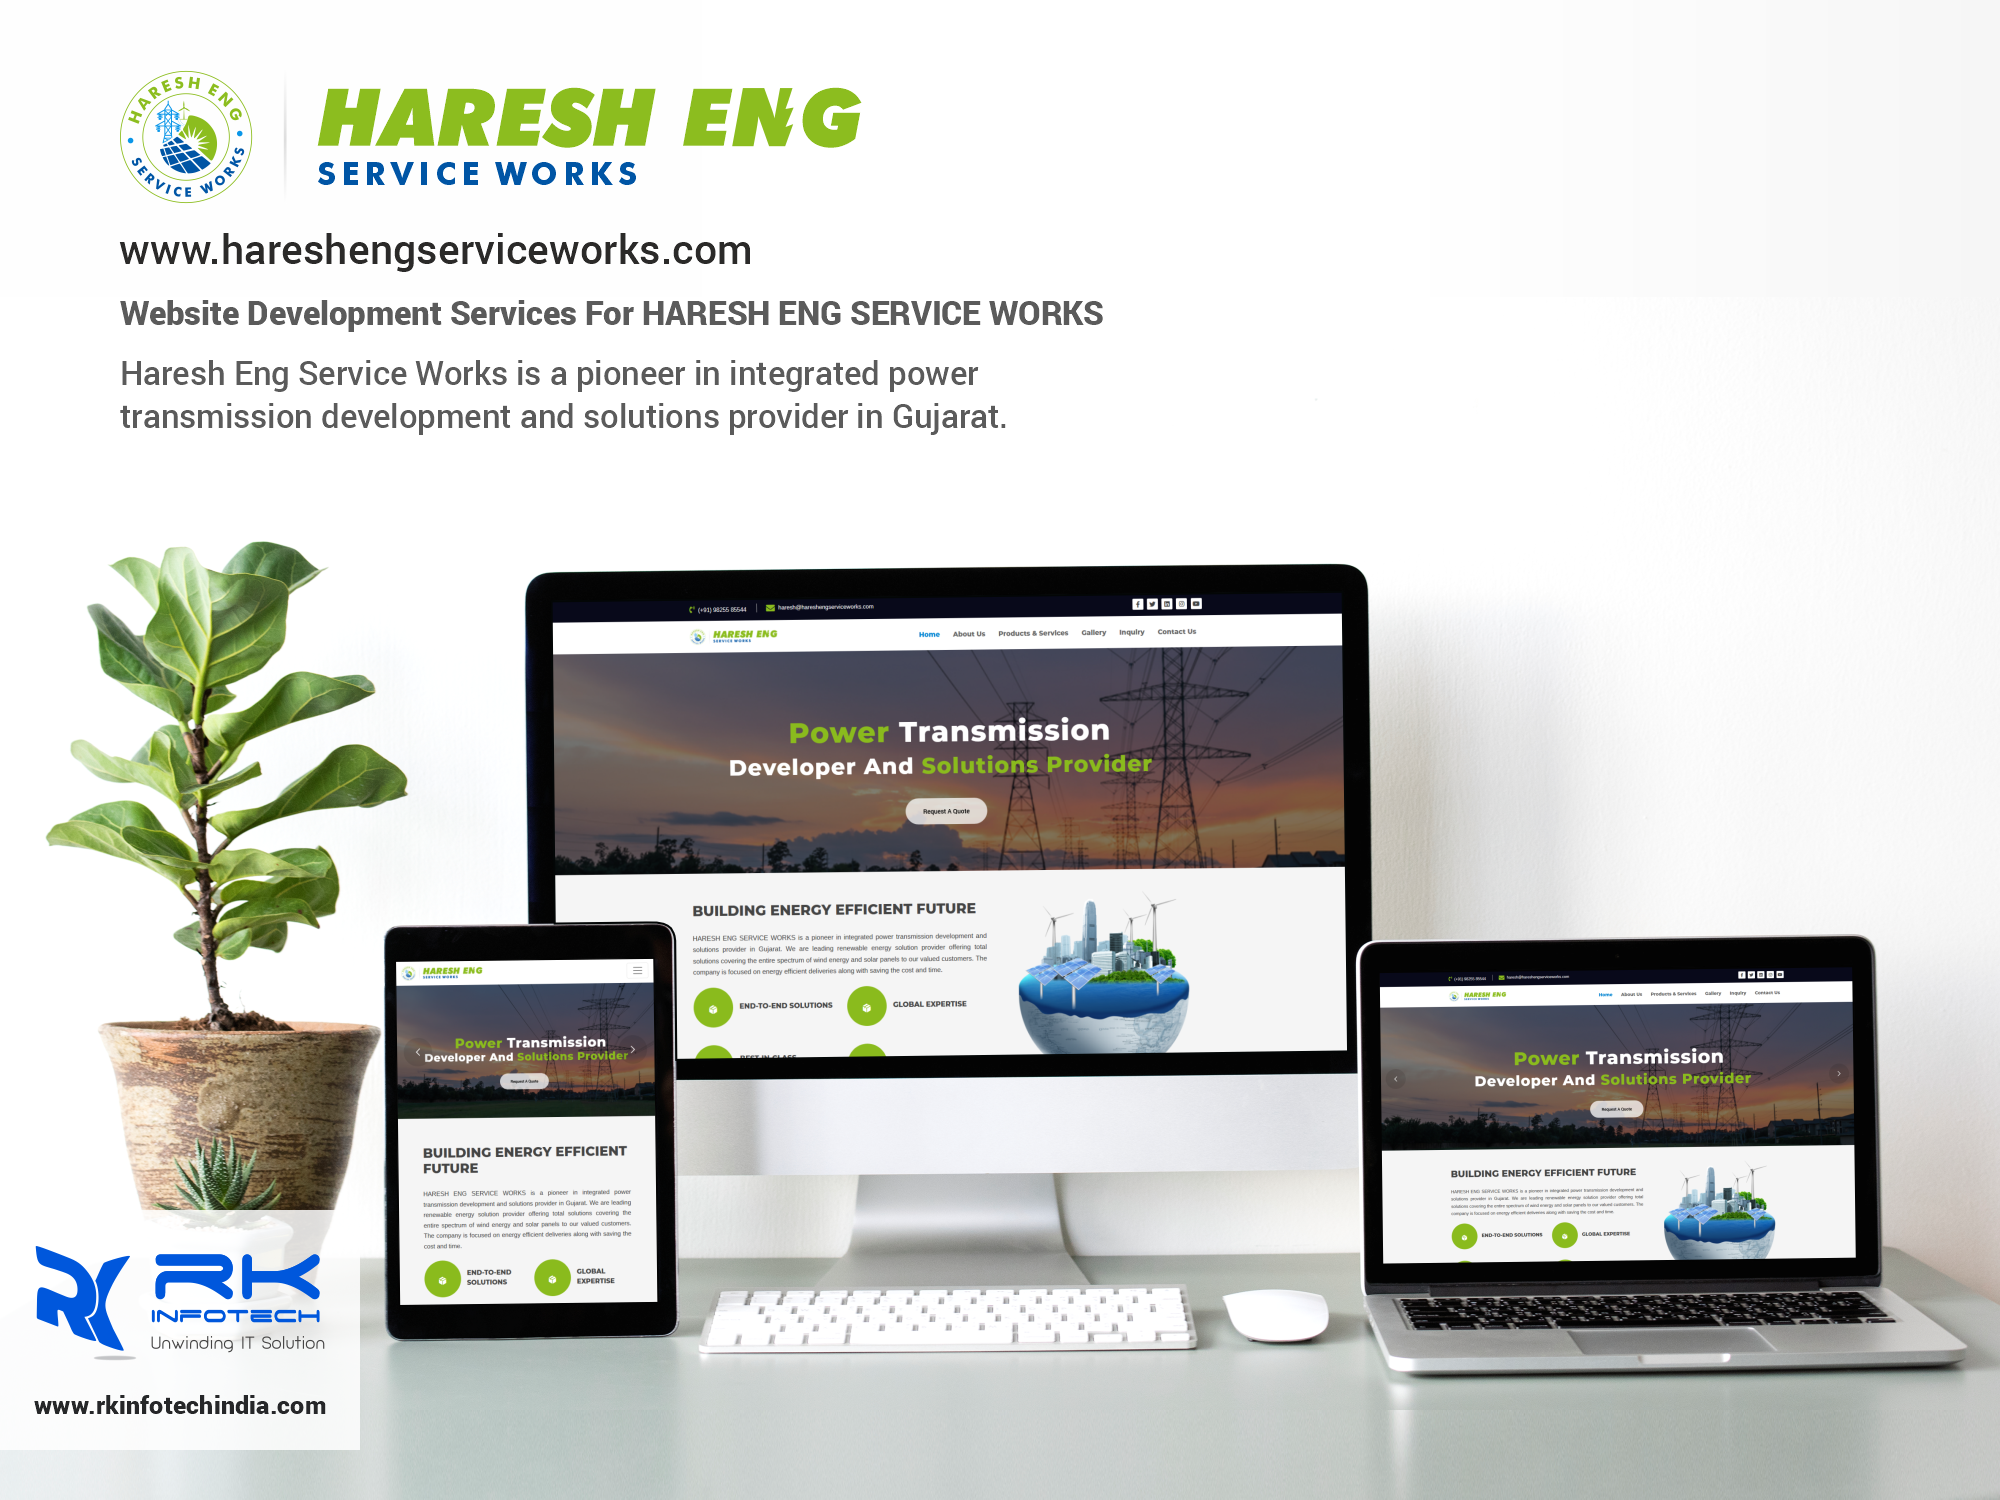 Haresh Eng Service Works